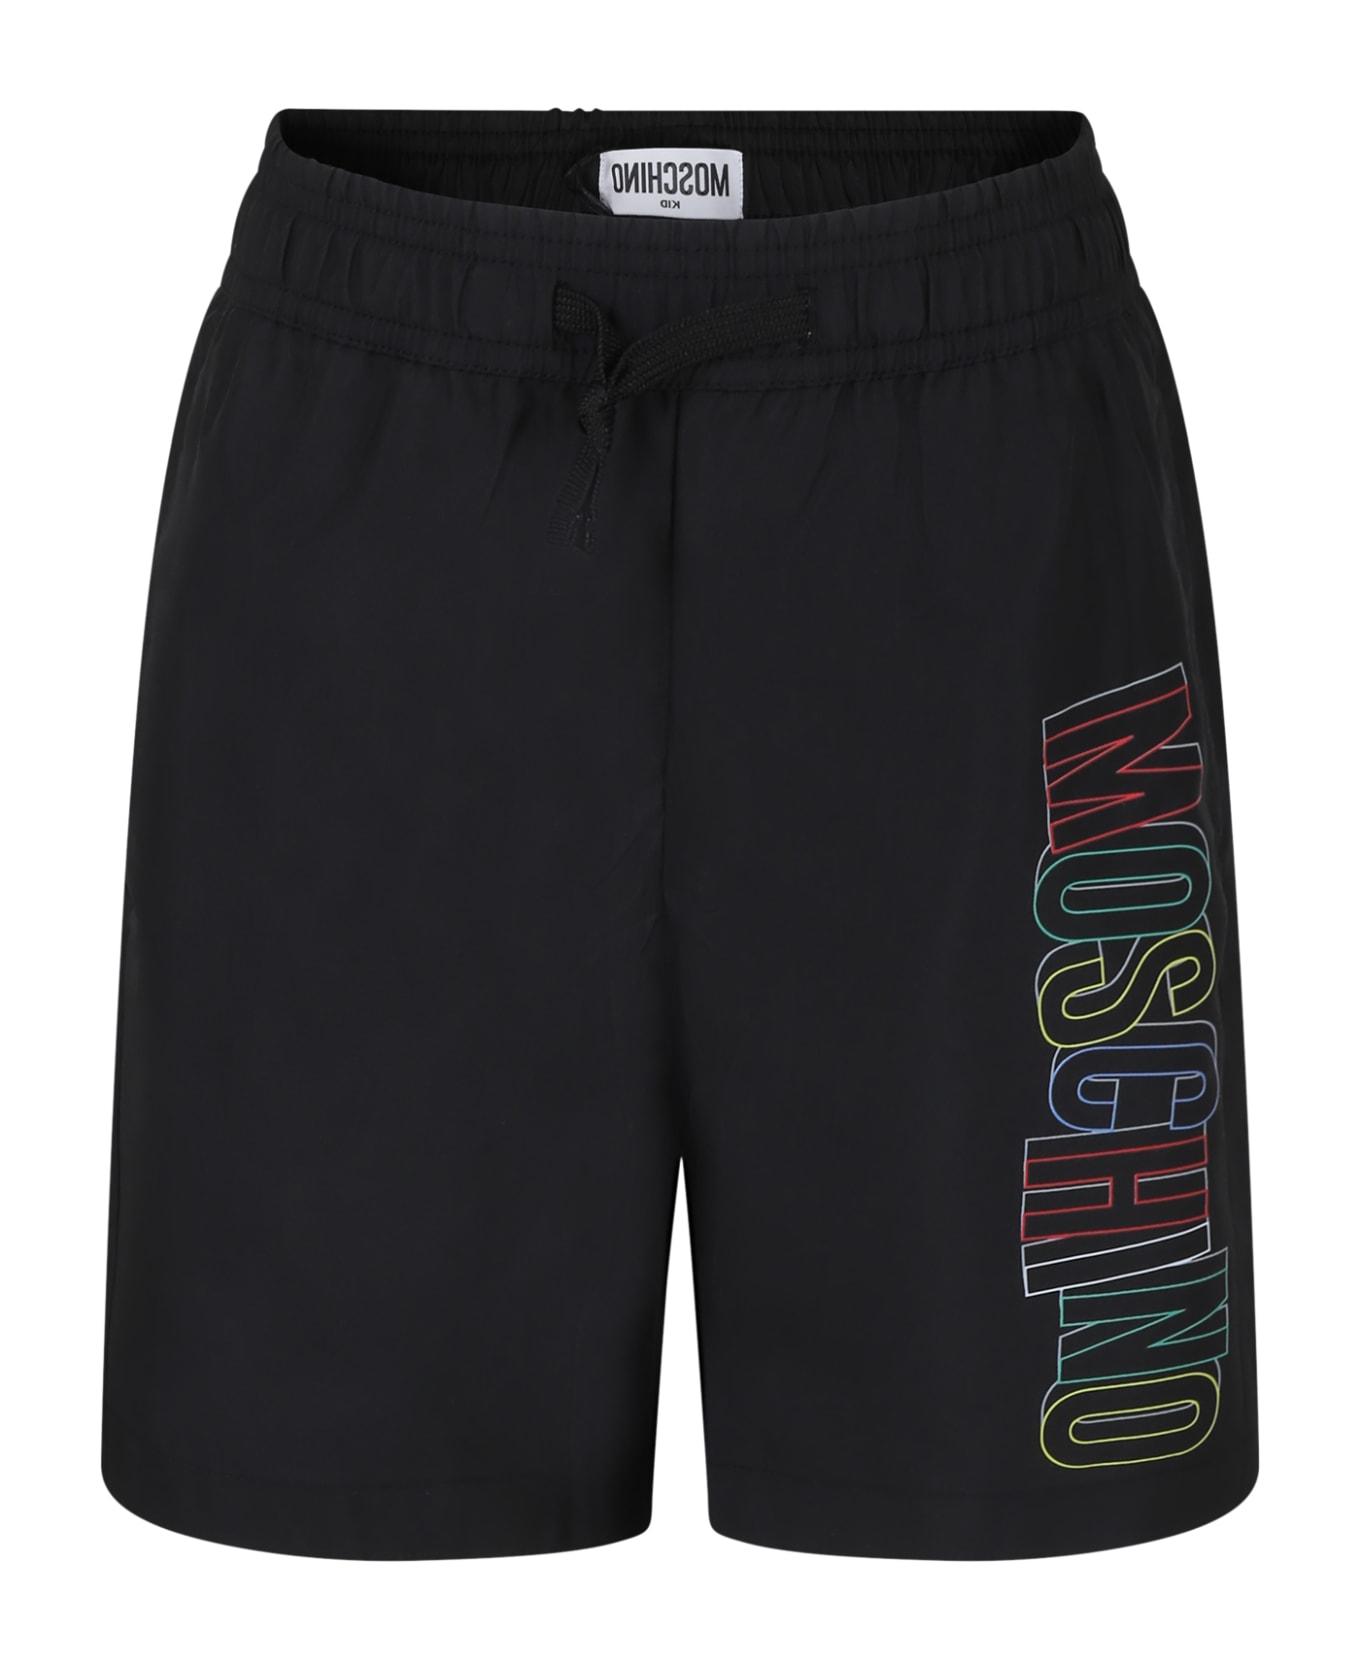 Moschino Black Swim Shorts For Boy With Logo - Black